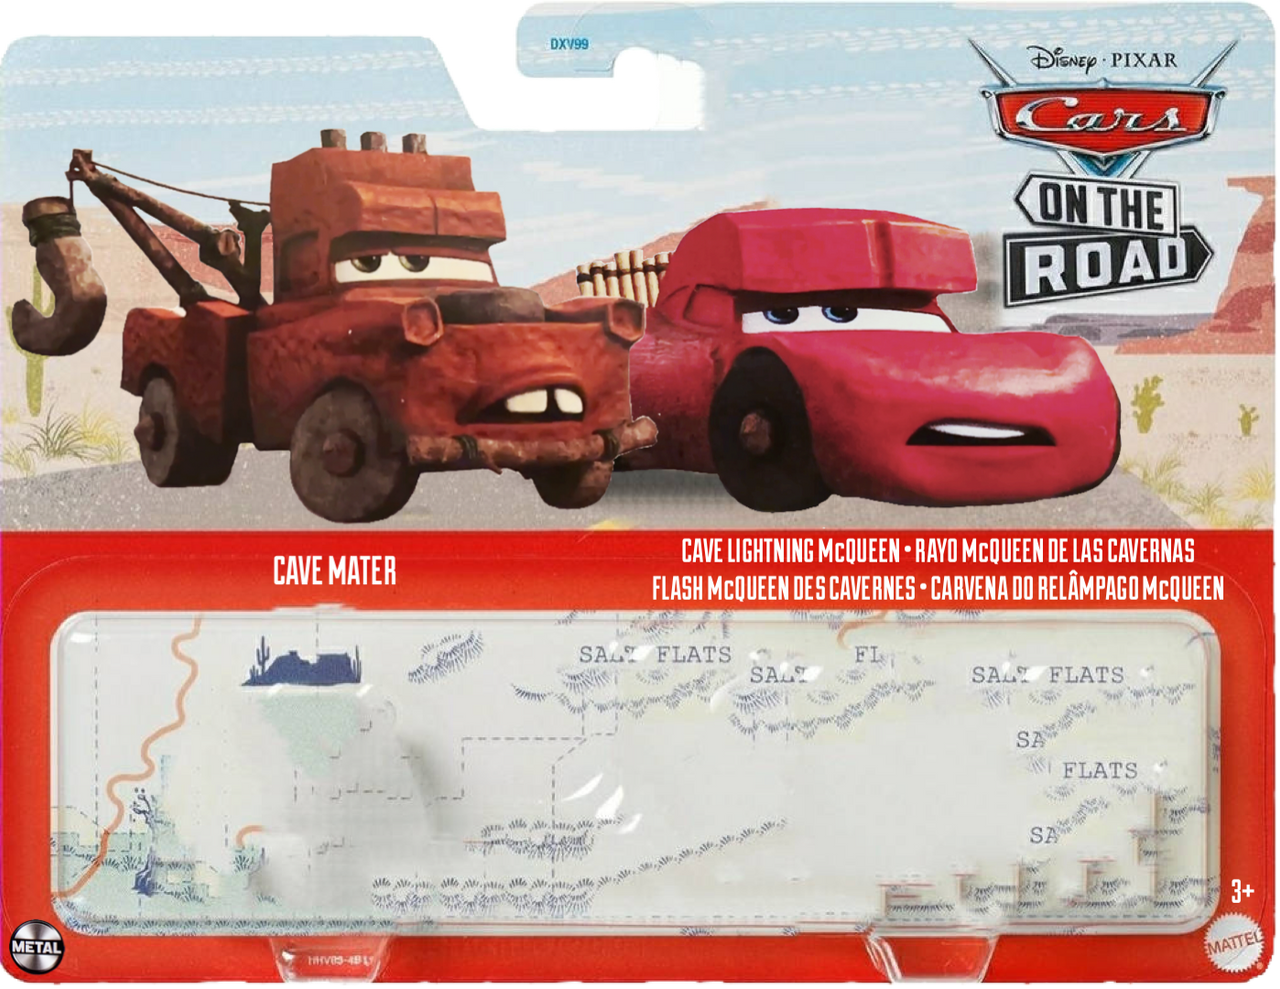 Cars On The Road (Disney Plus) Bigfoot by LightningMcQueen2017 on DeviantArt